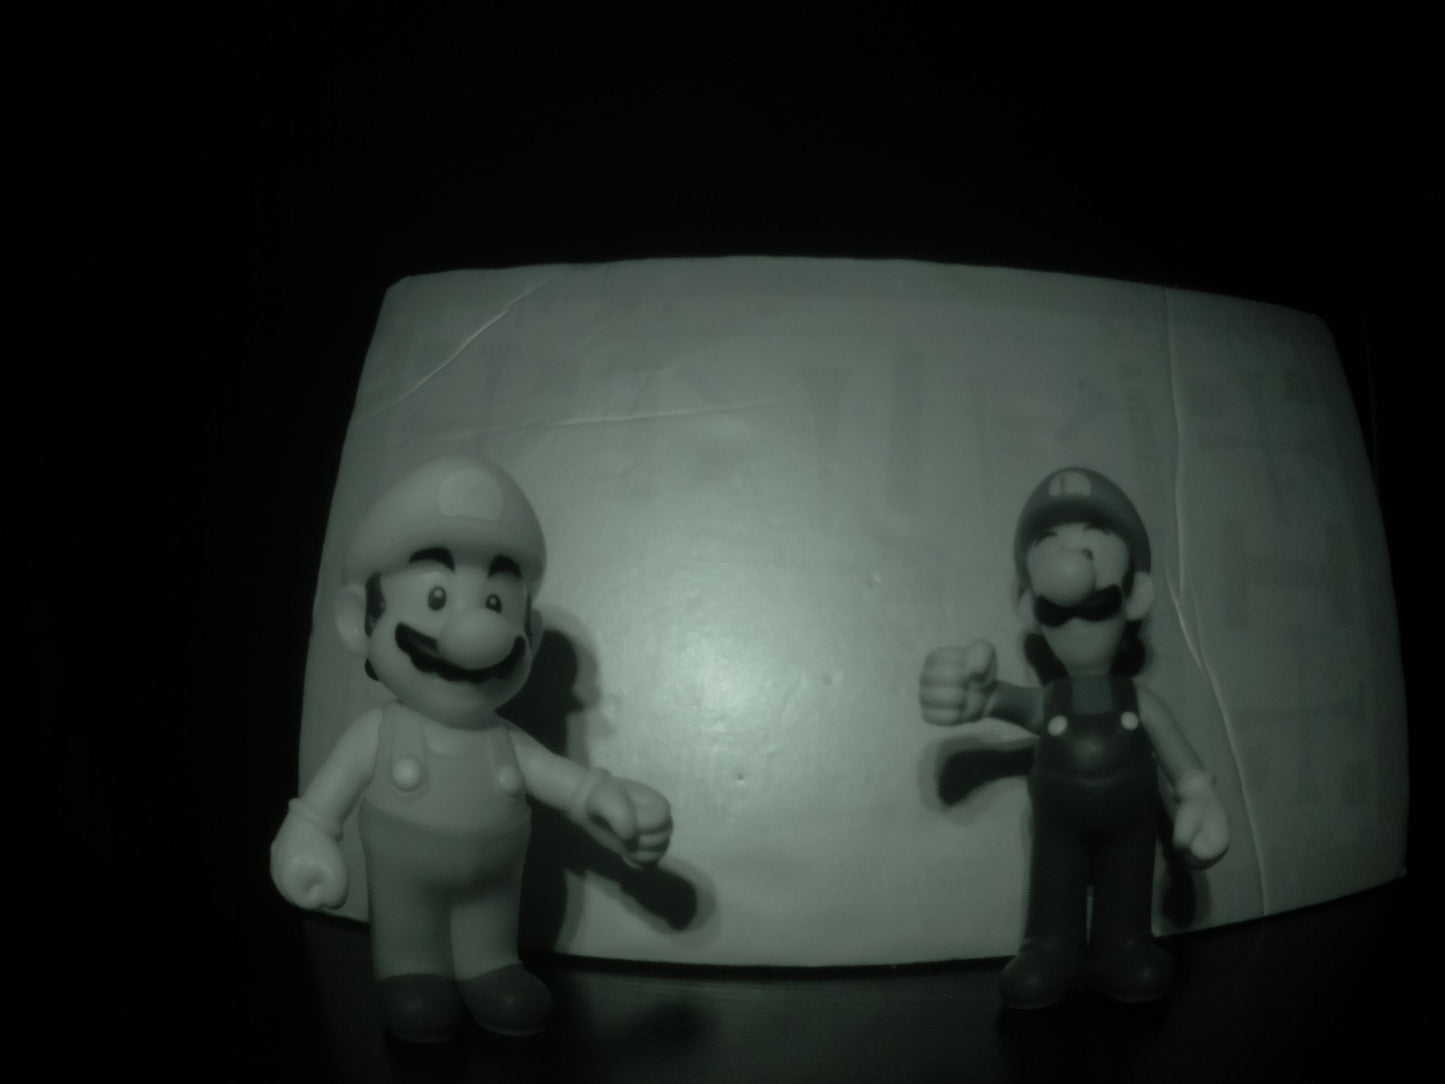 Night image of Mario and Luigi captured with the B0154 camera module